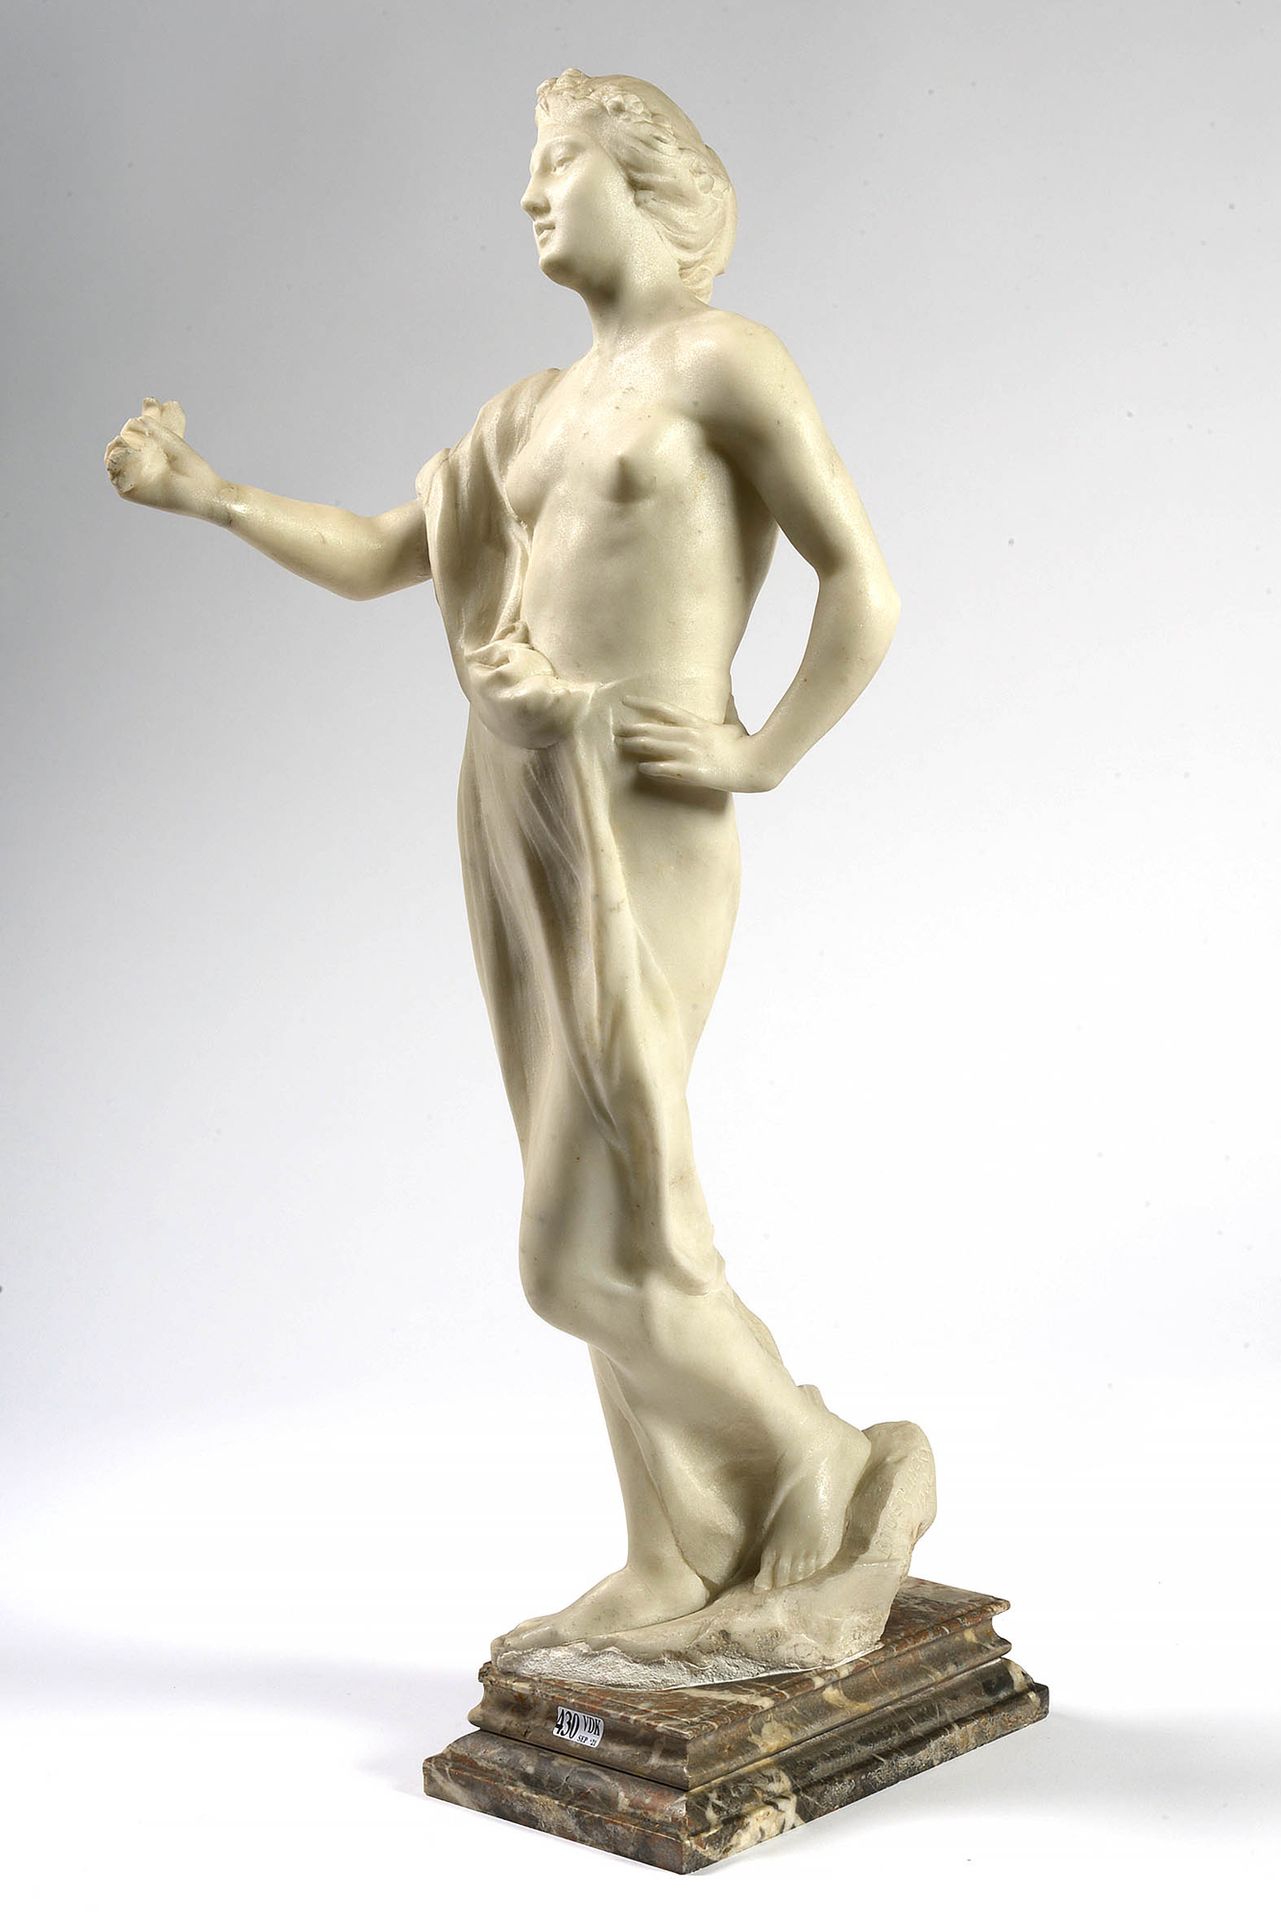 TUERLINCKX Boudewyn (1873 - 1945) "Allegory of Spring" in white marble. Signed B&hellip;